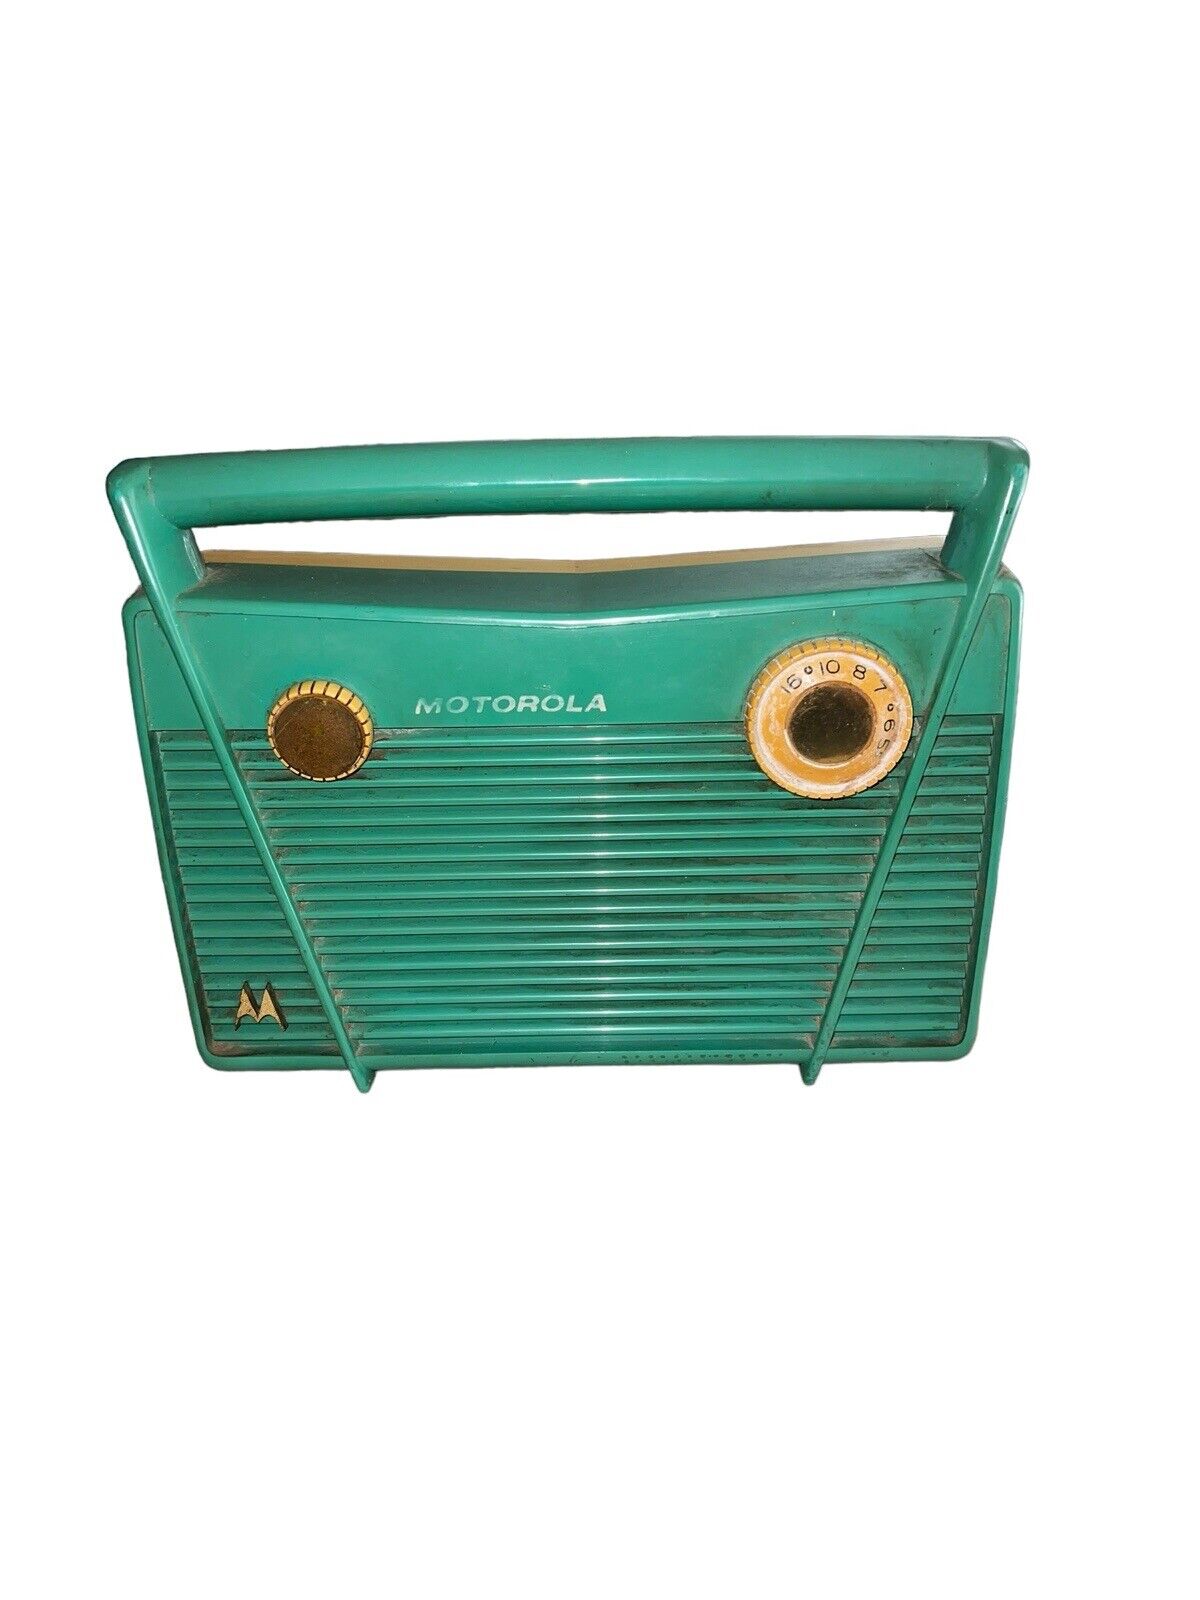 1950's Motorola Corsair 5P21B Green Portable Tube AM Radio Tested Prop